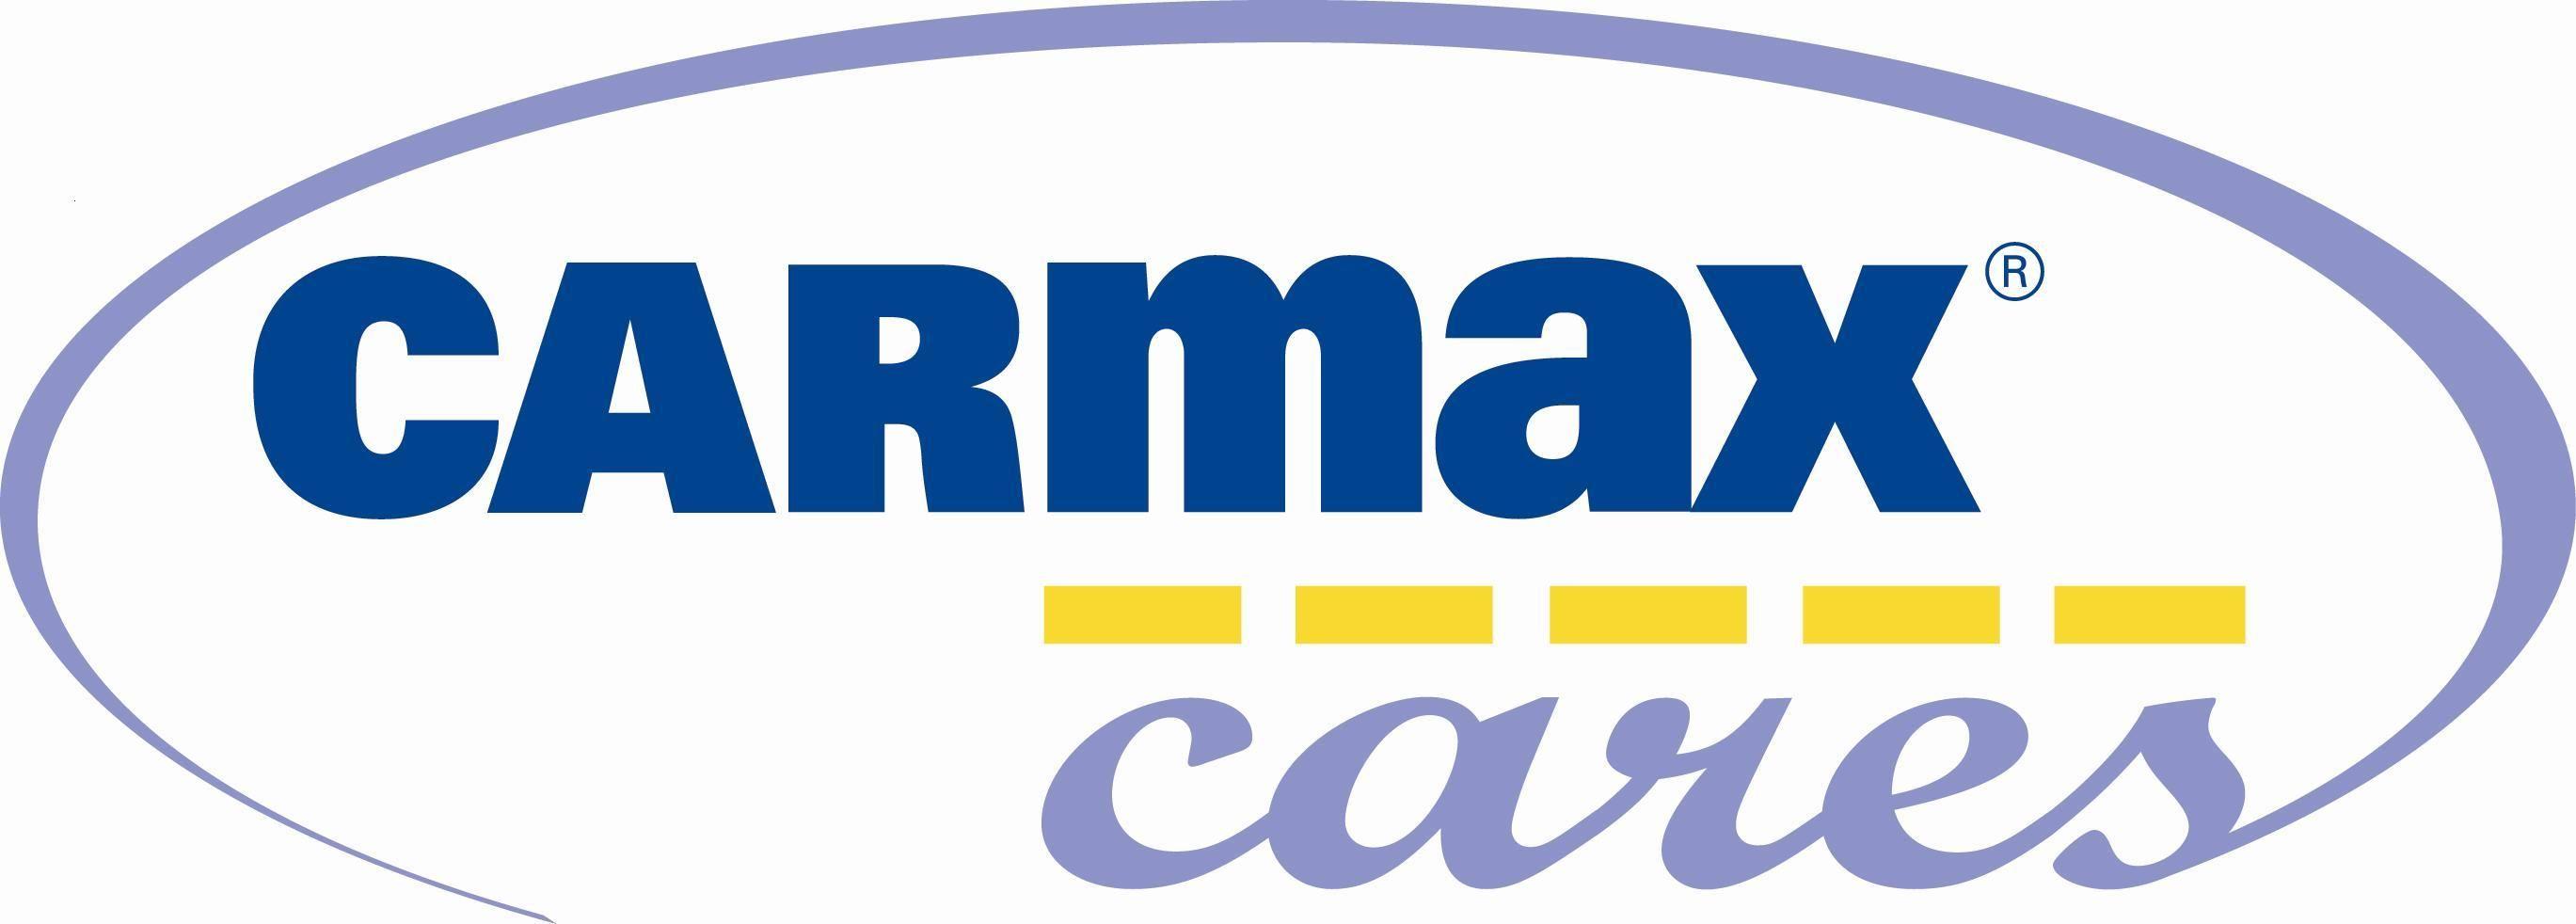 CarMax Logo - Carmax logo resized Child Care Resources